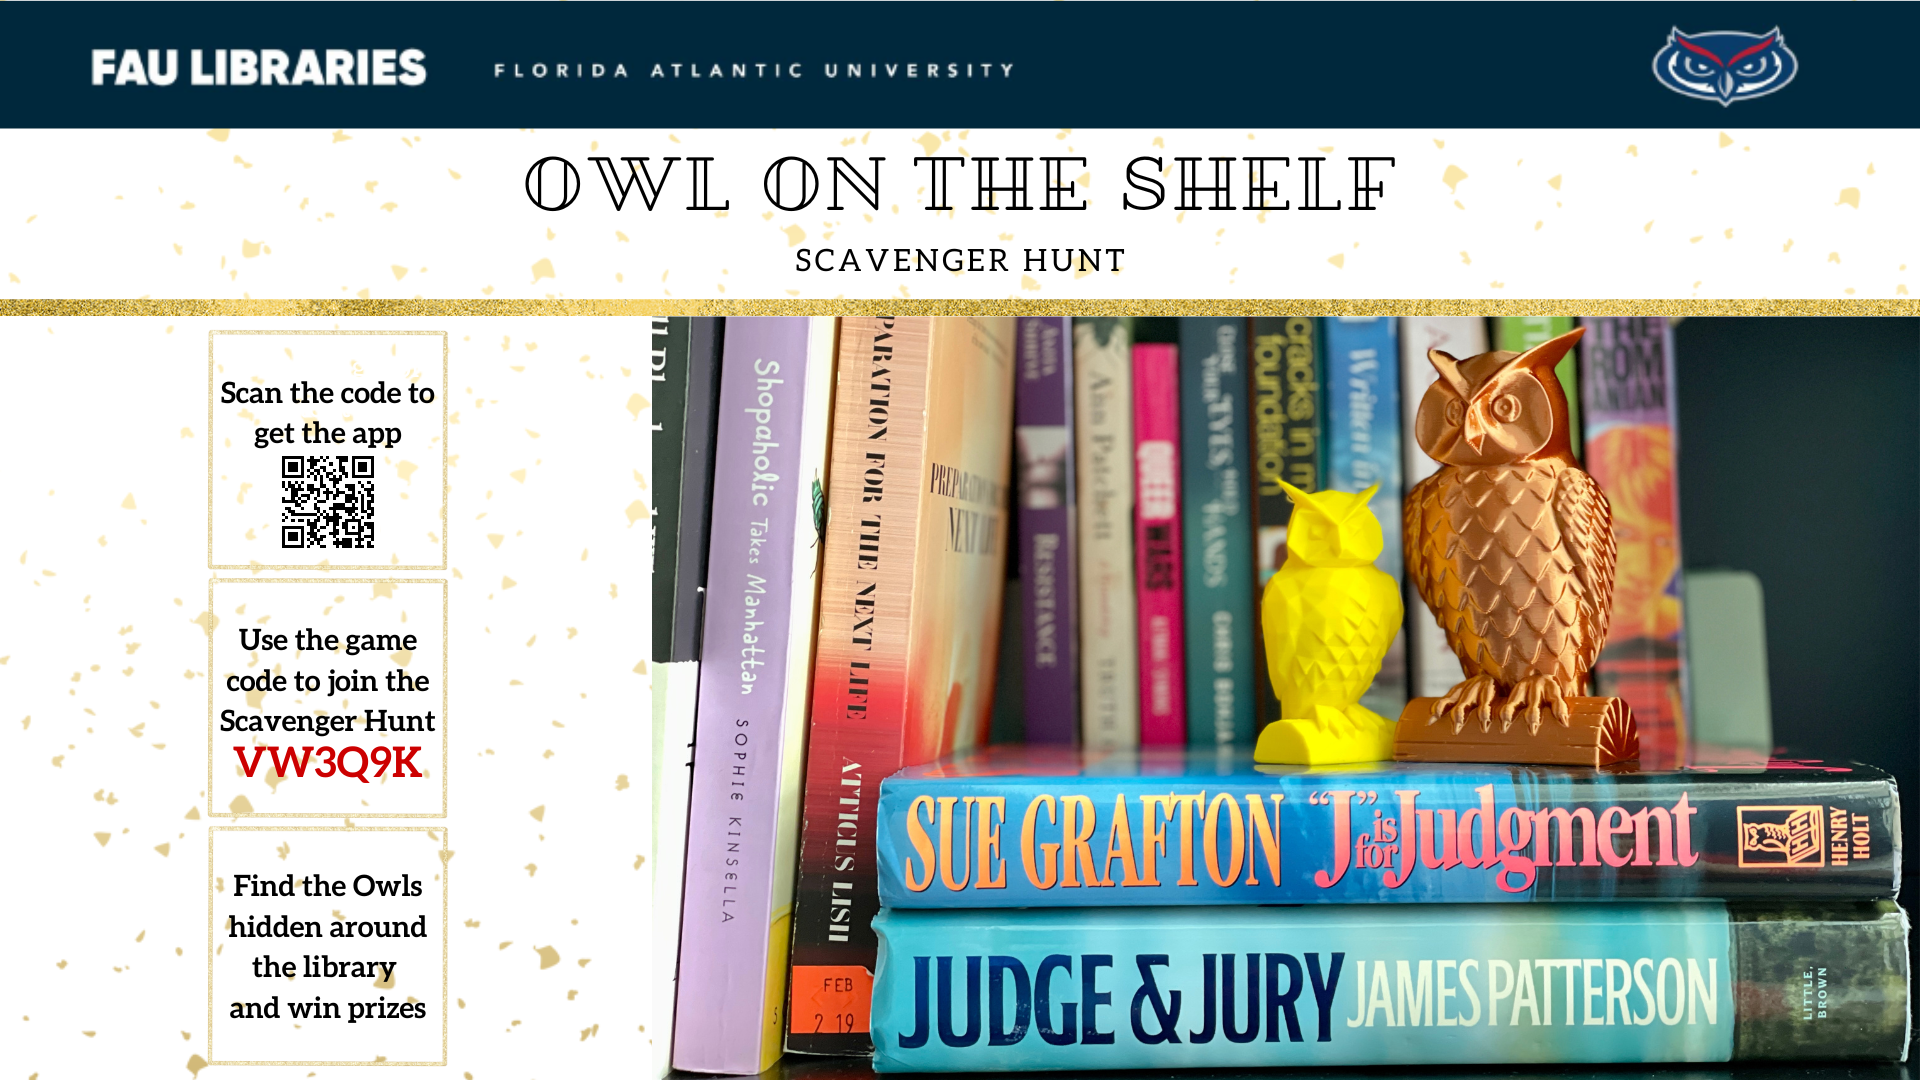 Owl on the Shelf FAU Libraries